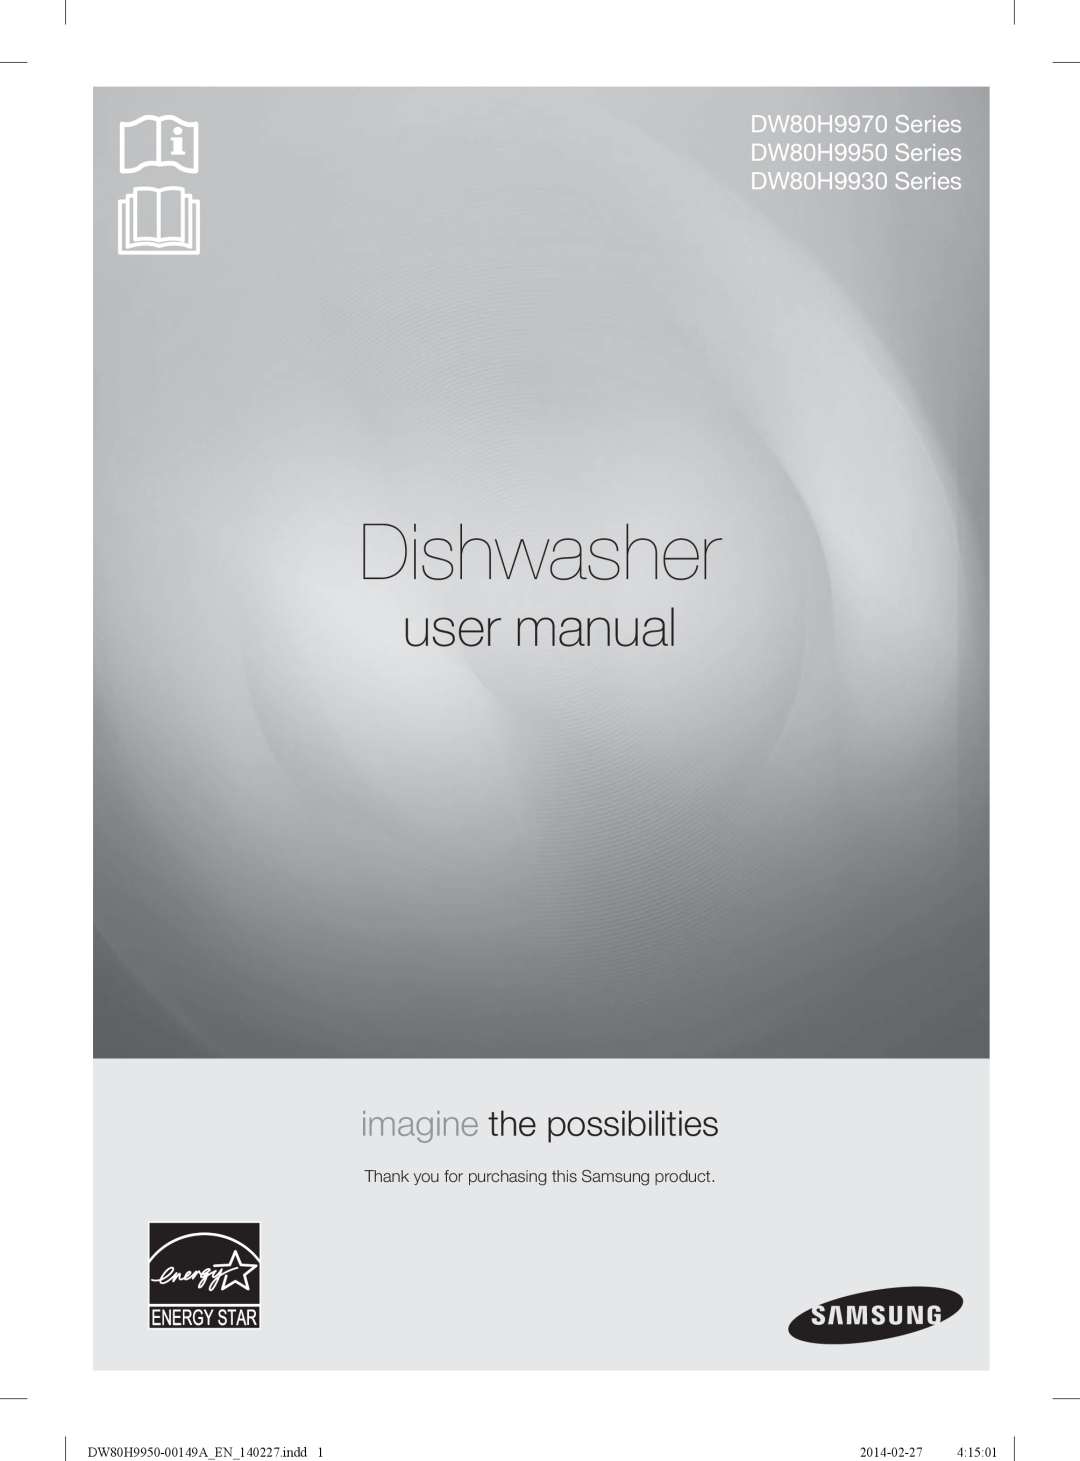 Samsung DW80H9930US user manual Dishwasher, imagine the possibilities, DW80H9970 Series DW80H9950 Series DW80H9930 Series 